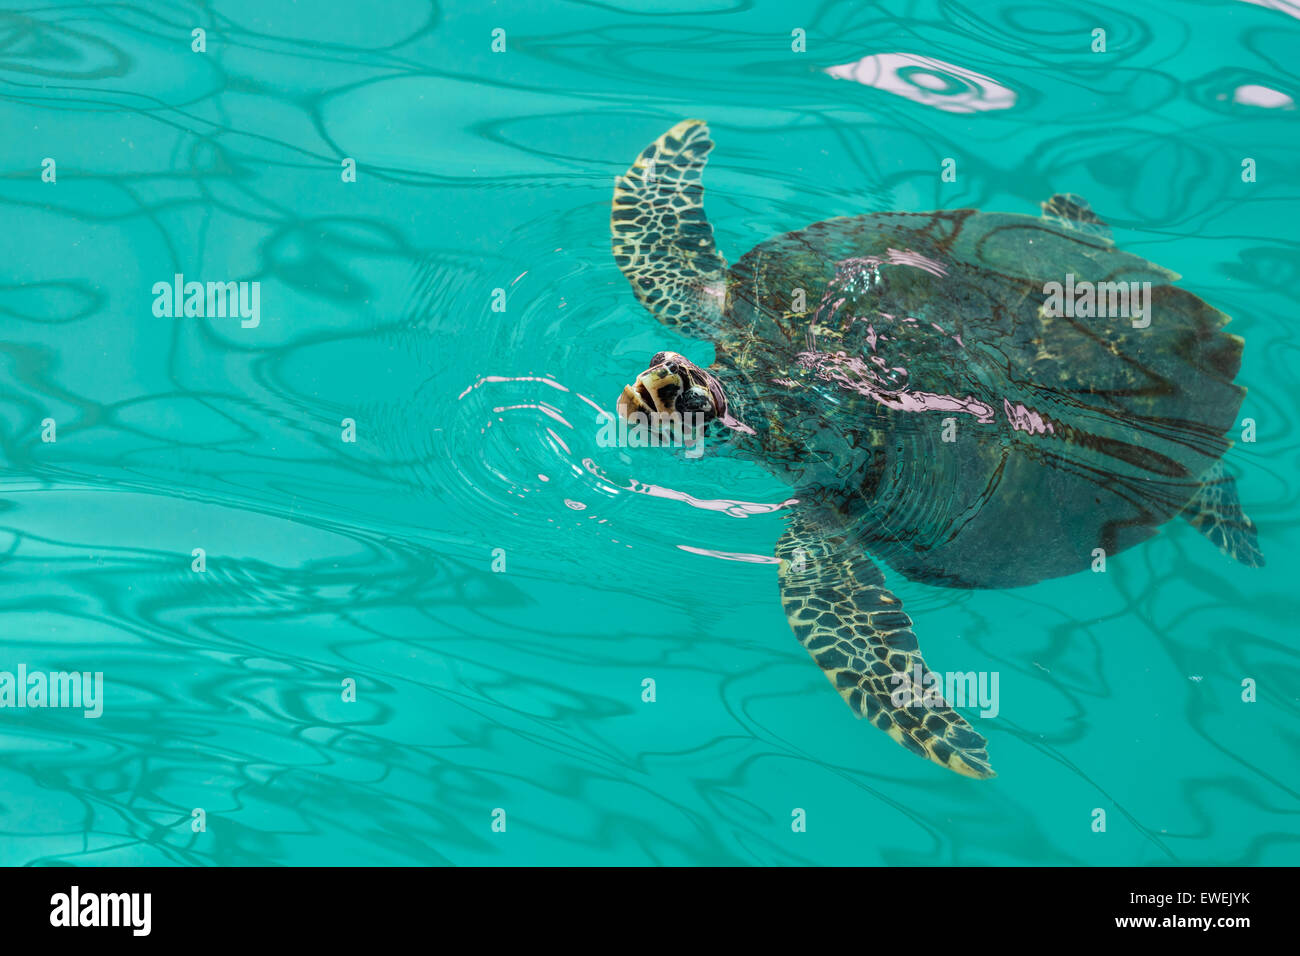 Tortue de mer nageant dans une piscine verte. Banque D'Images